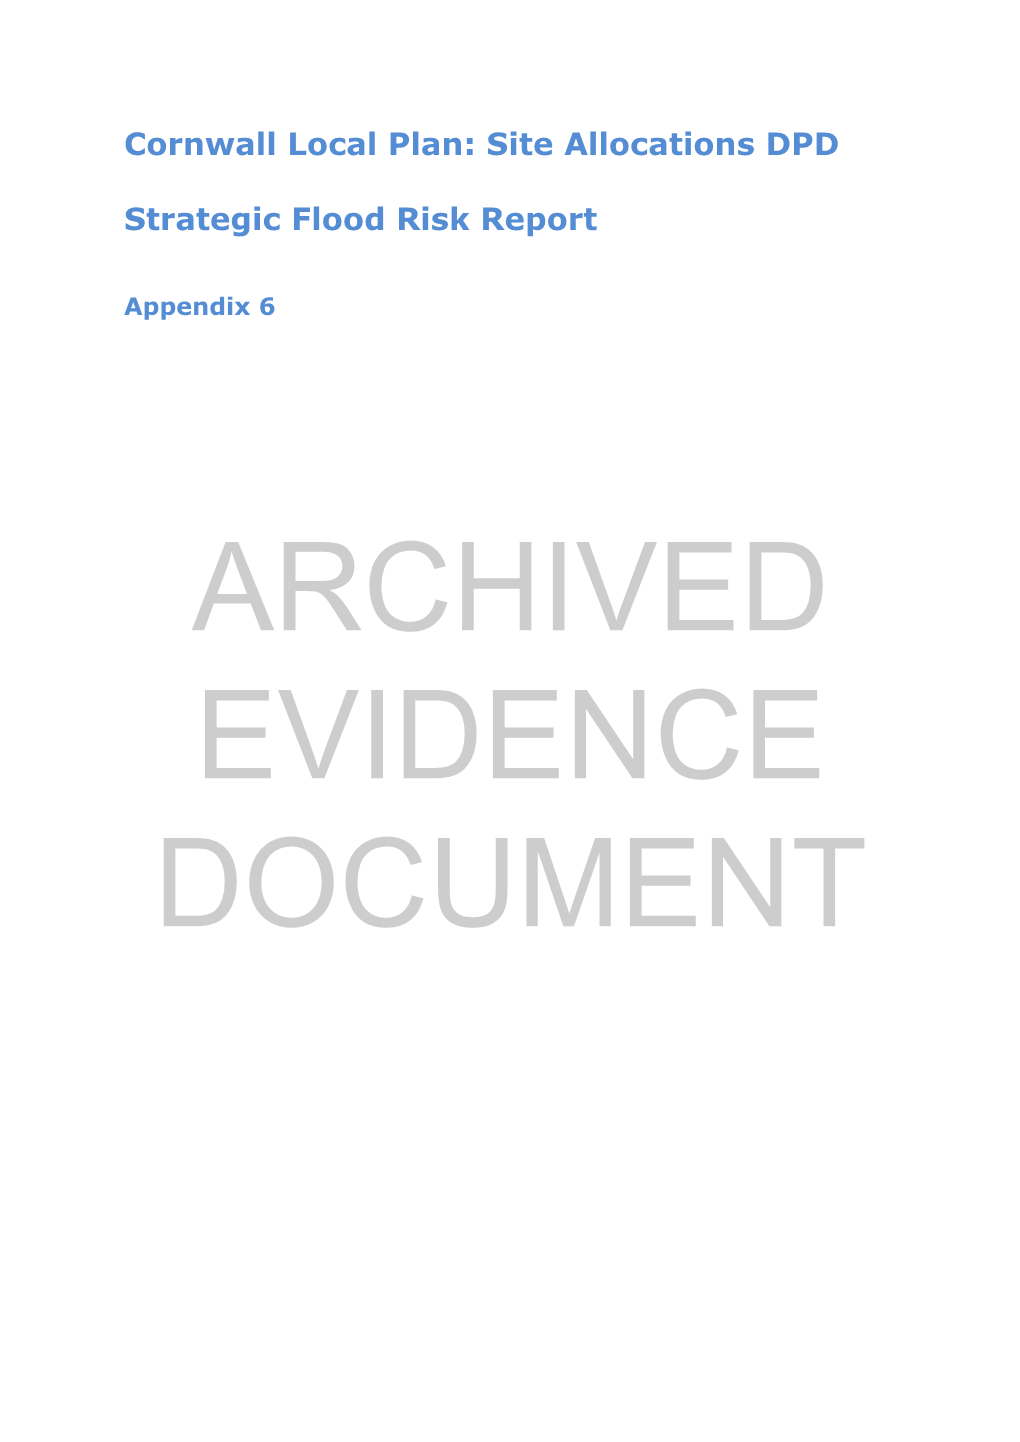 Site Allocations DPD Strategic Flood Risk Report